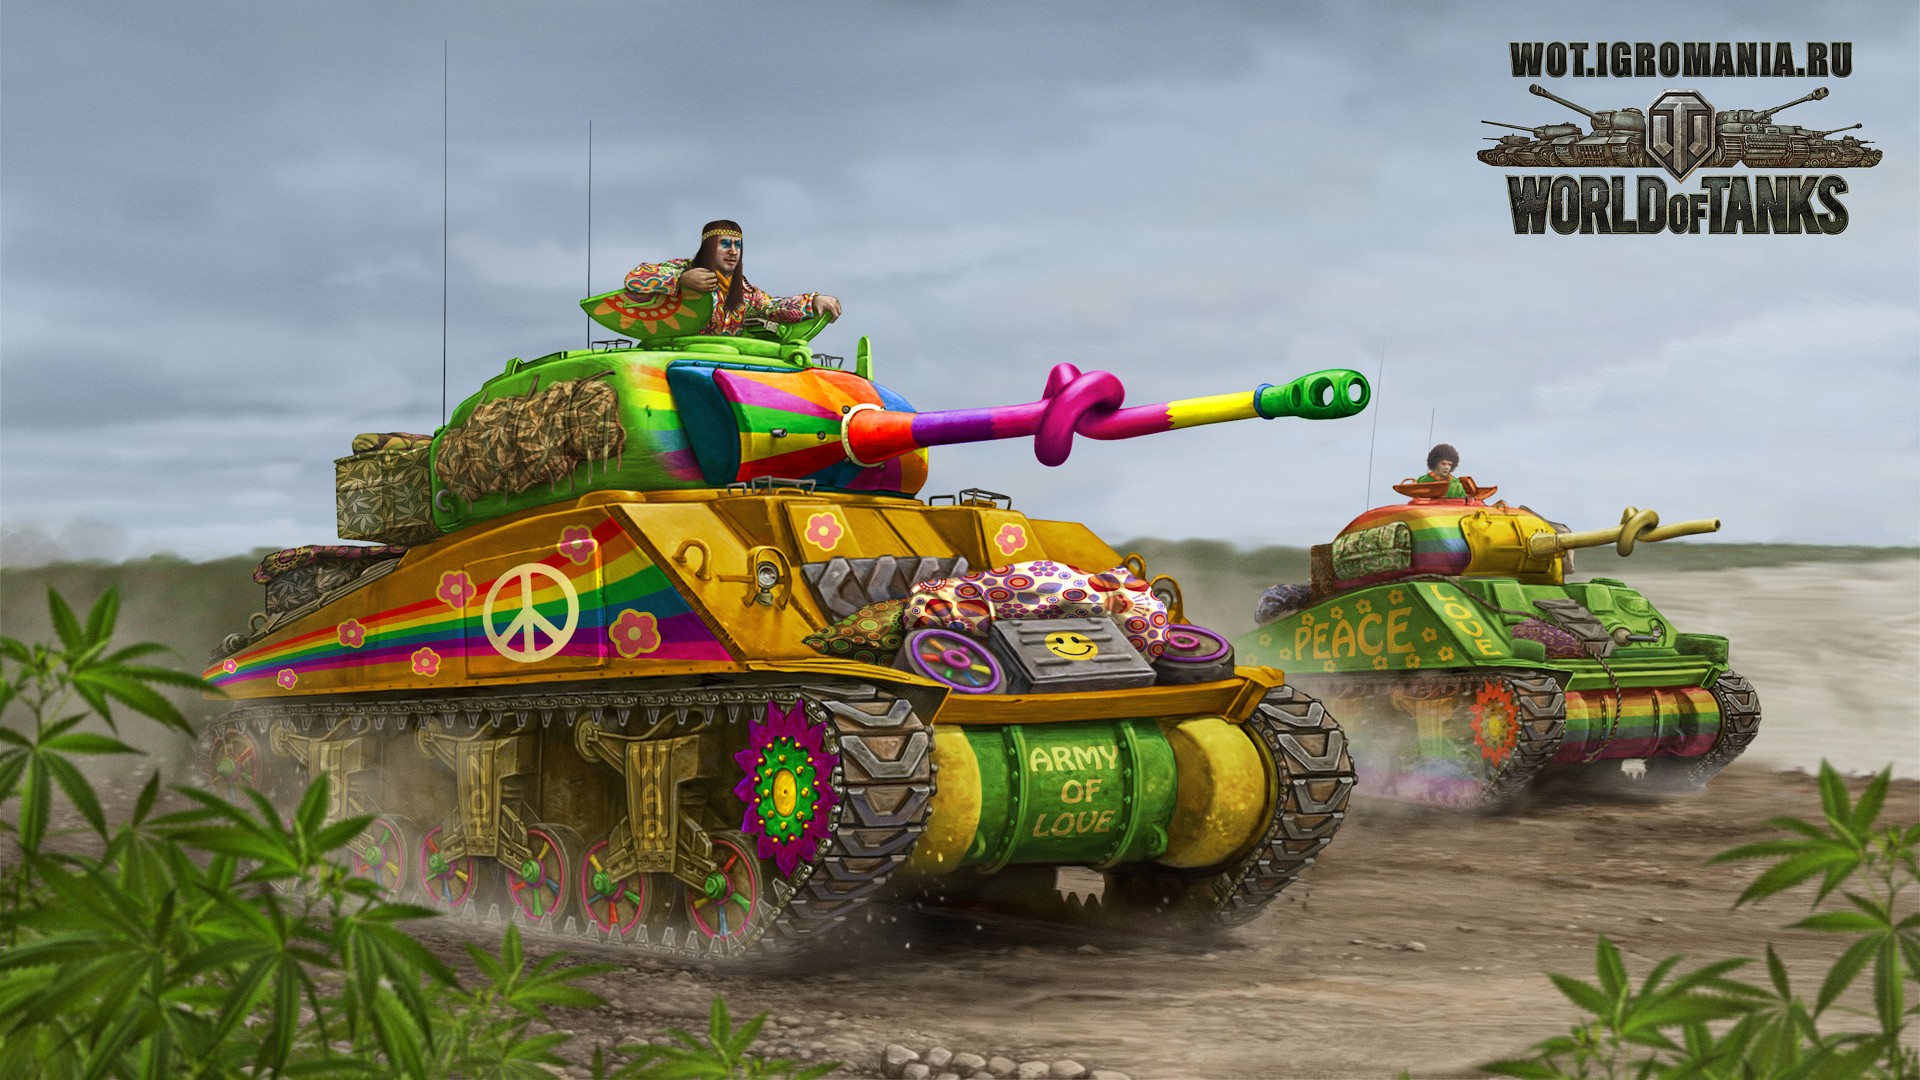 General 1920x1080 World of Tanks tank M4 Sherman wargaming video games PC gaming video game art colorful vehicle military vehicle